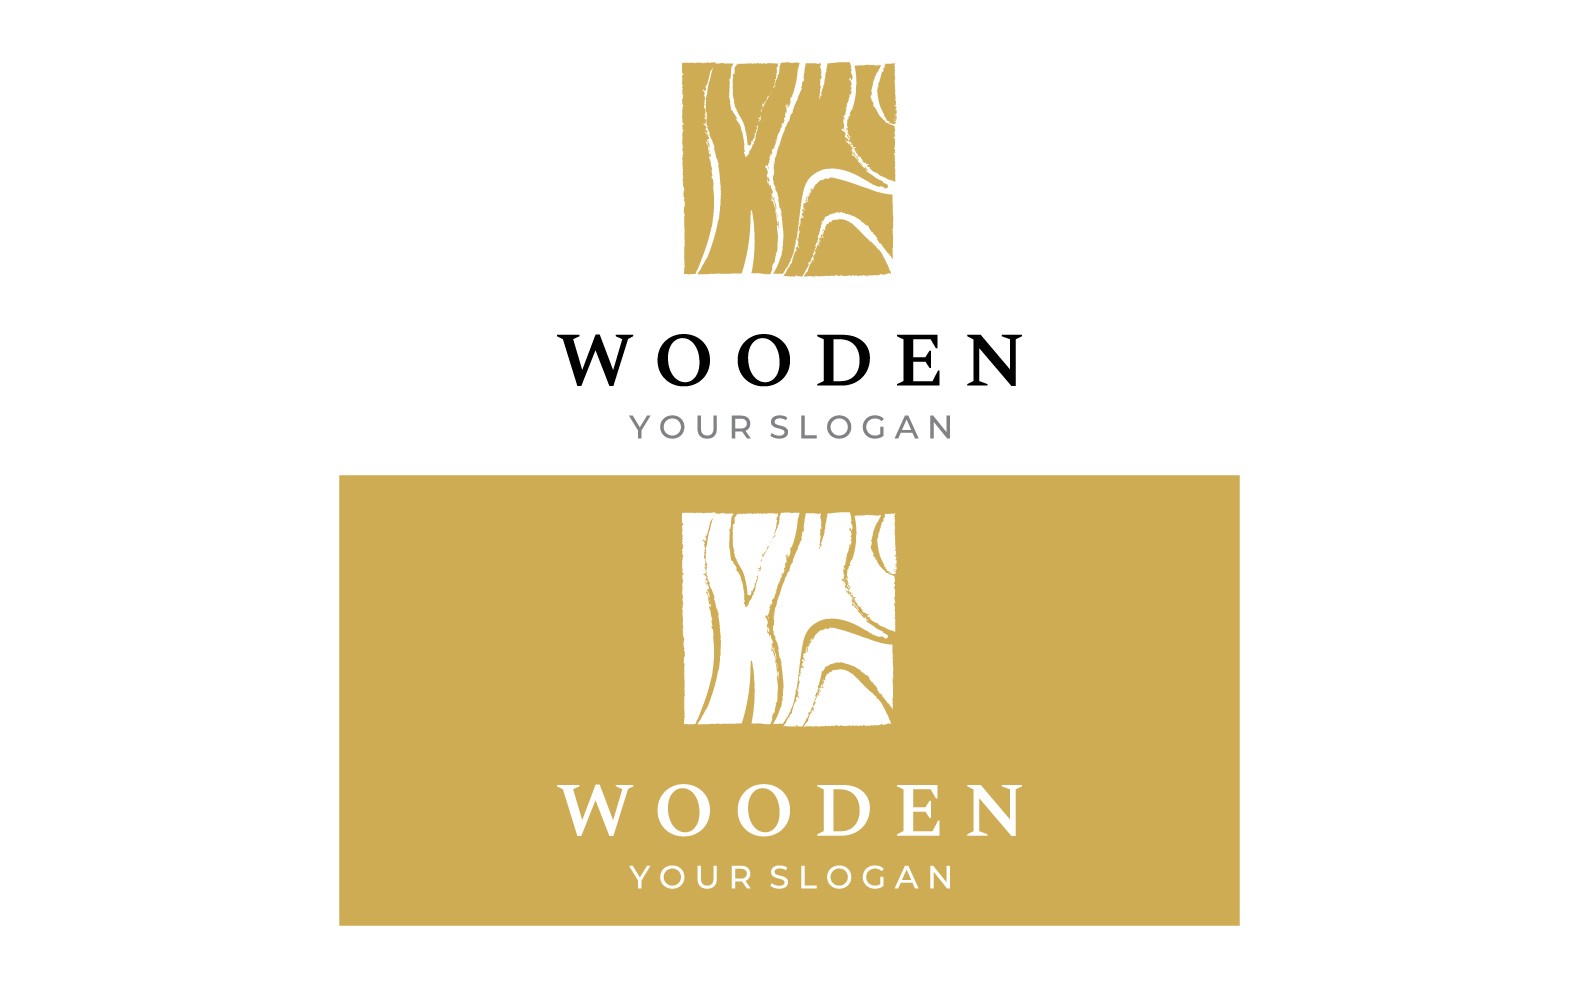 Wooden furniture work logo vector 10